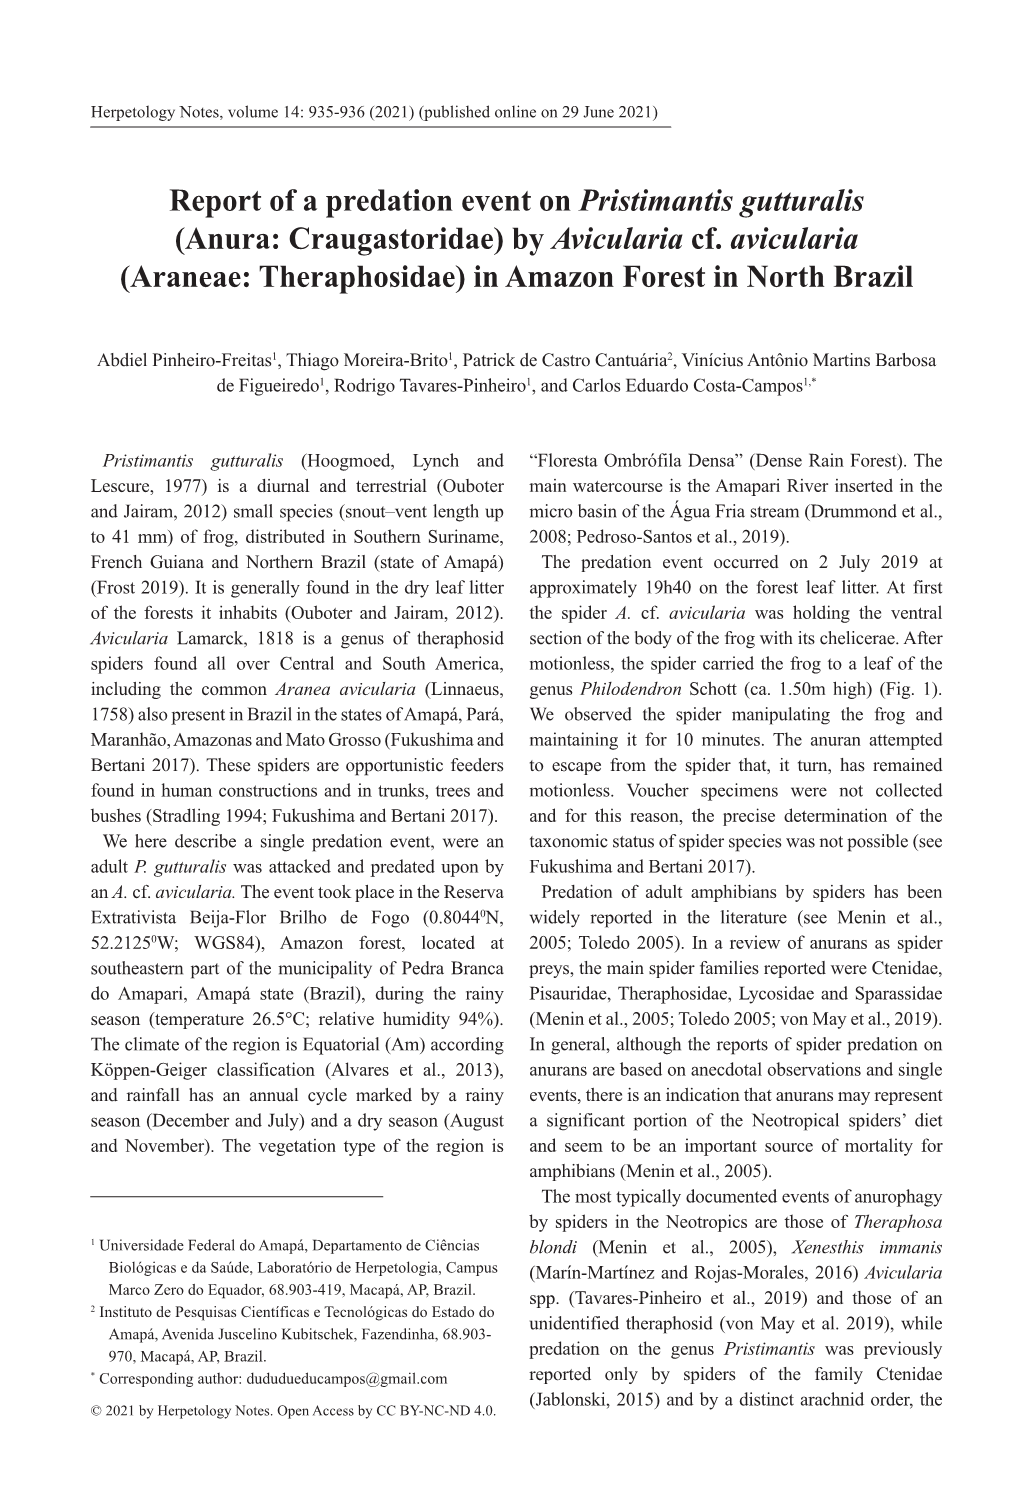 Report of a Predation Event on Pristimantis Gutturalis (Anura: Craugastoridae) by Avicularia Cf